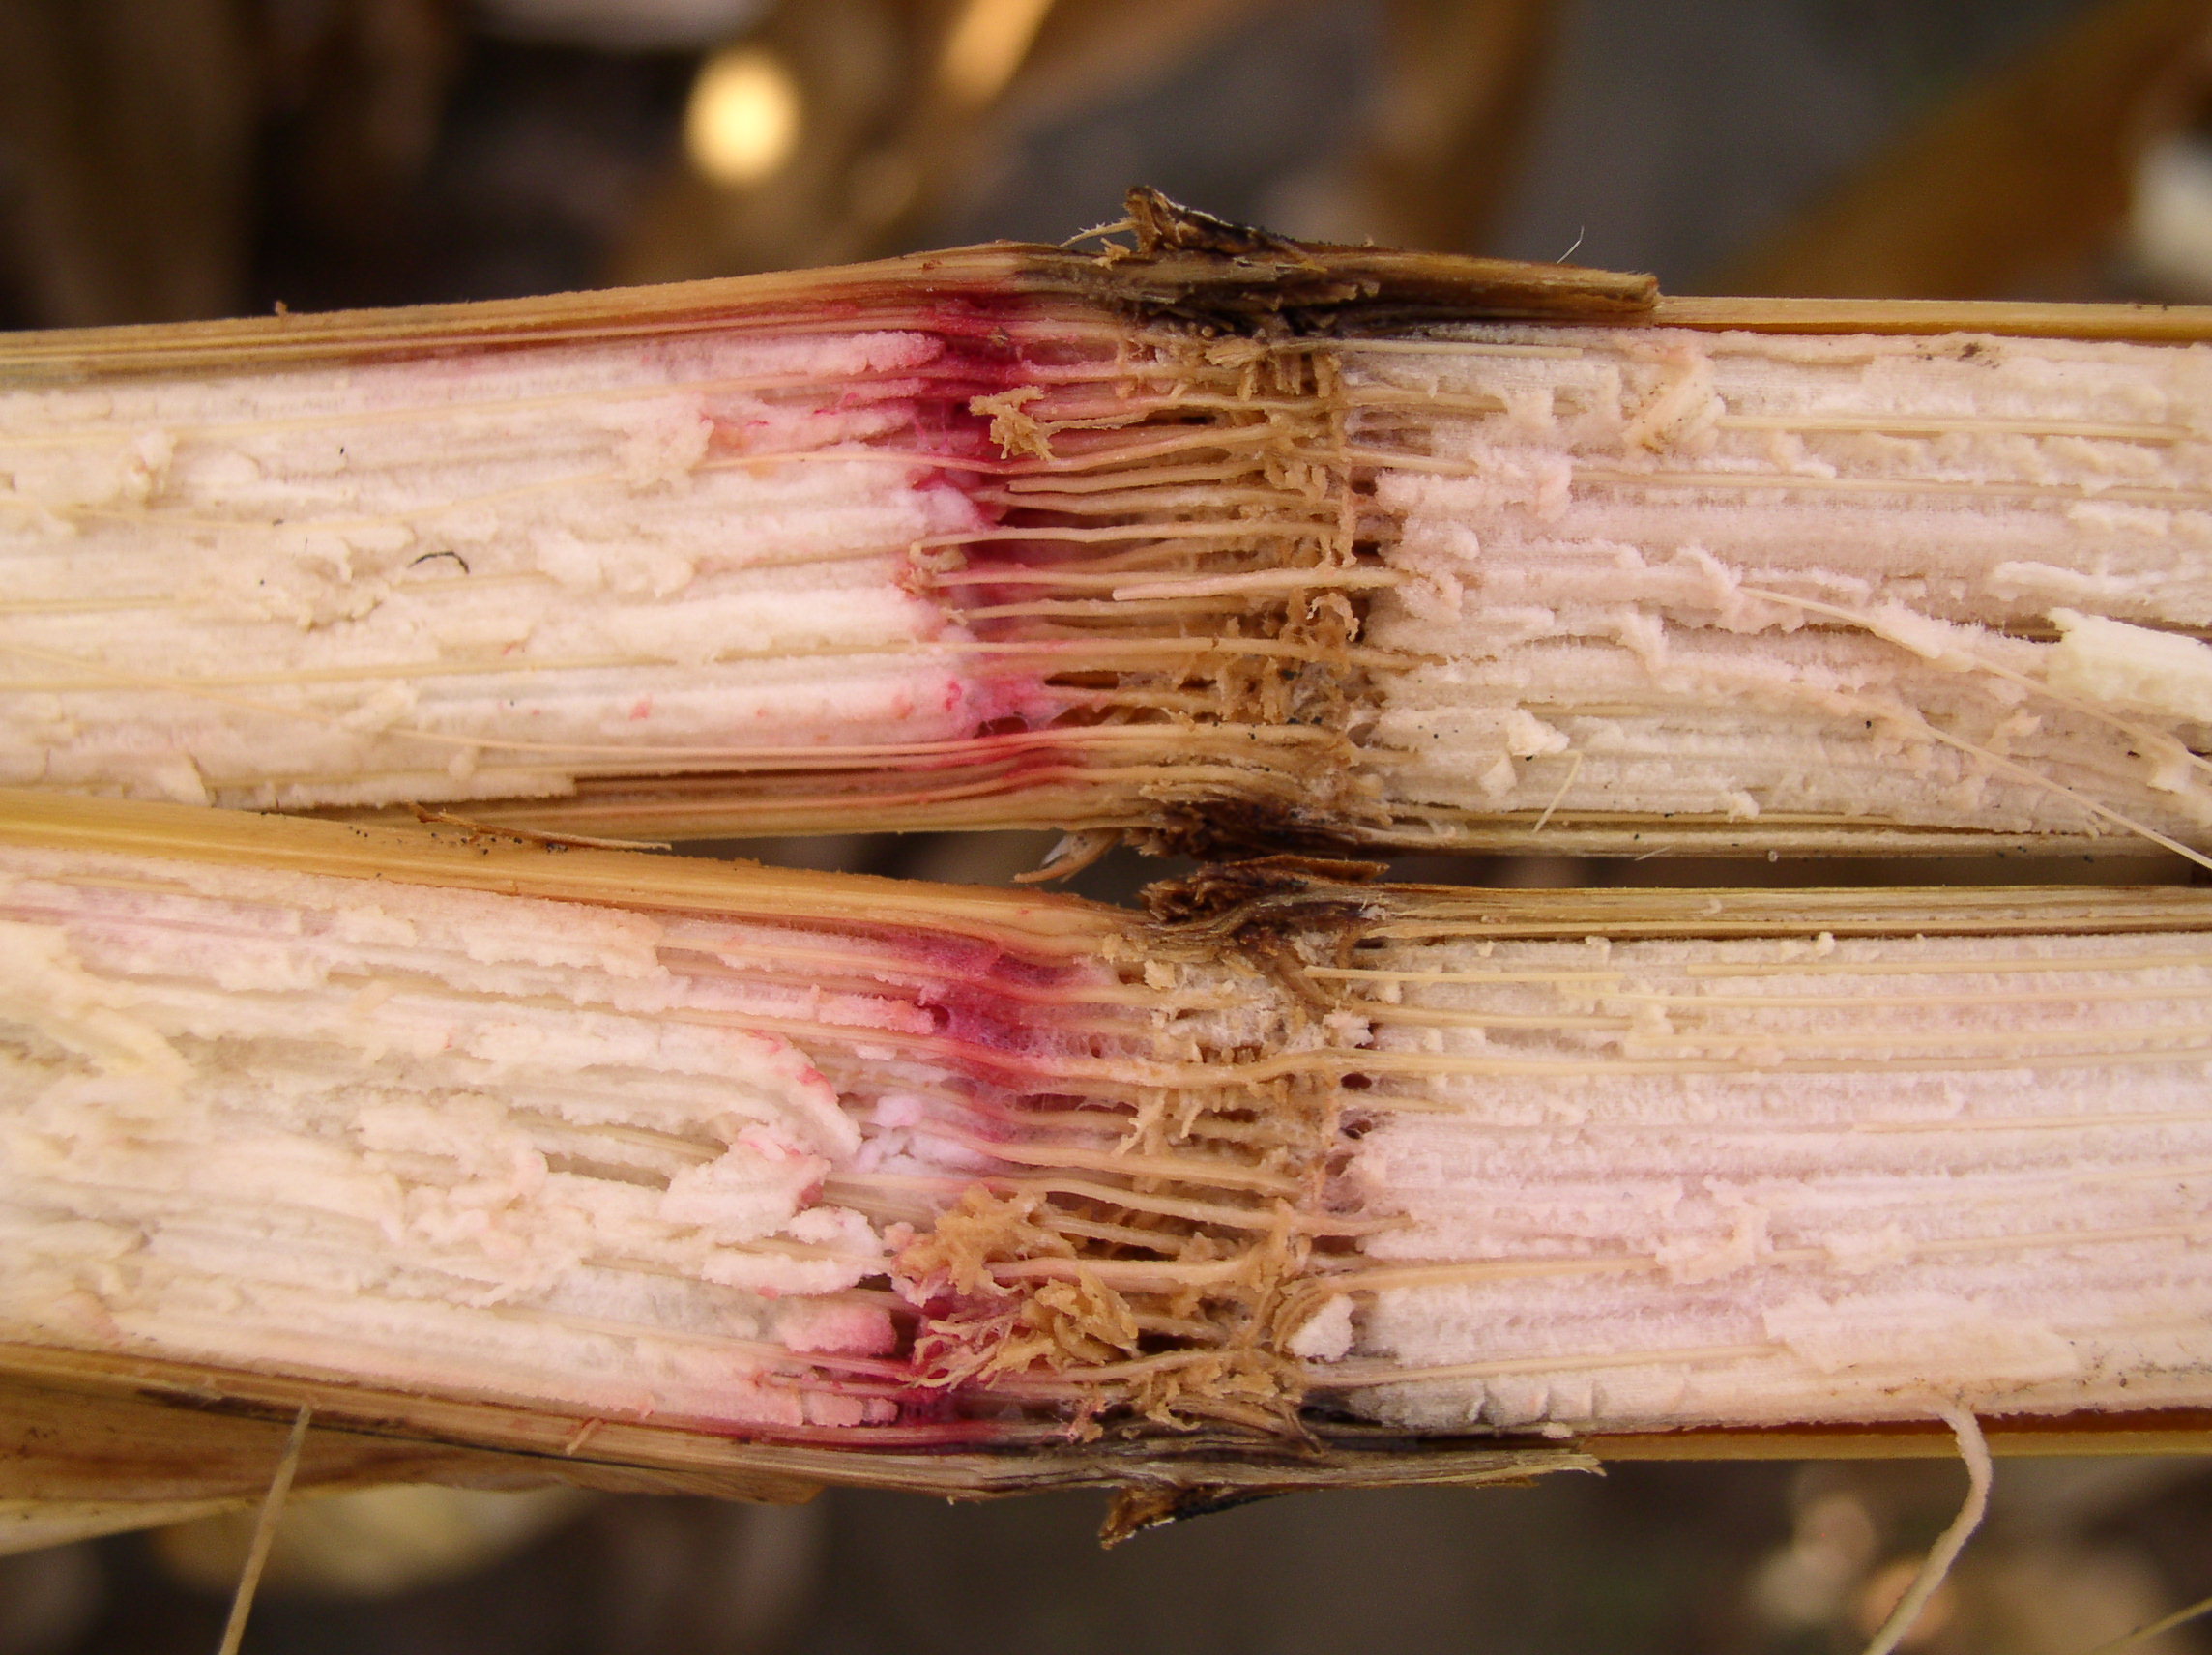 Pith shredding and discoloration indicative of Gibberella stalk rot.